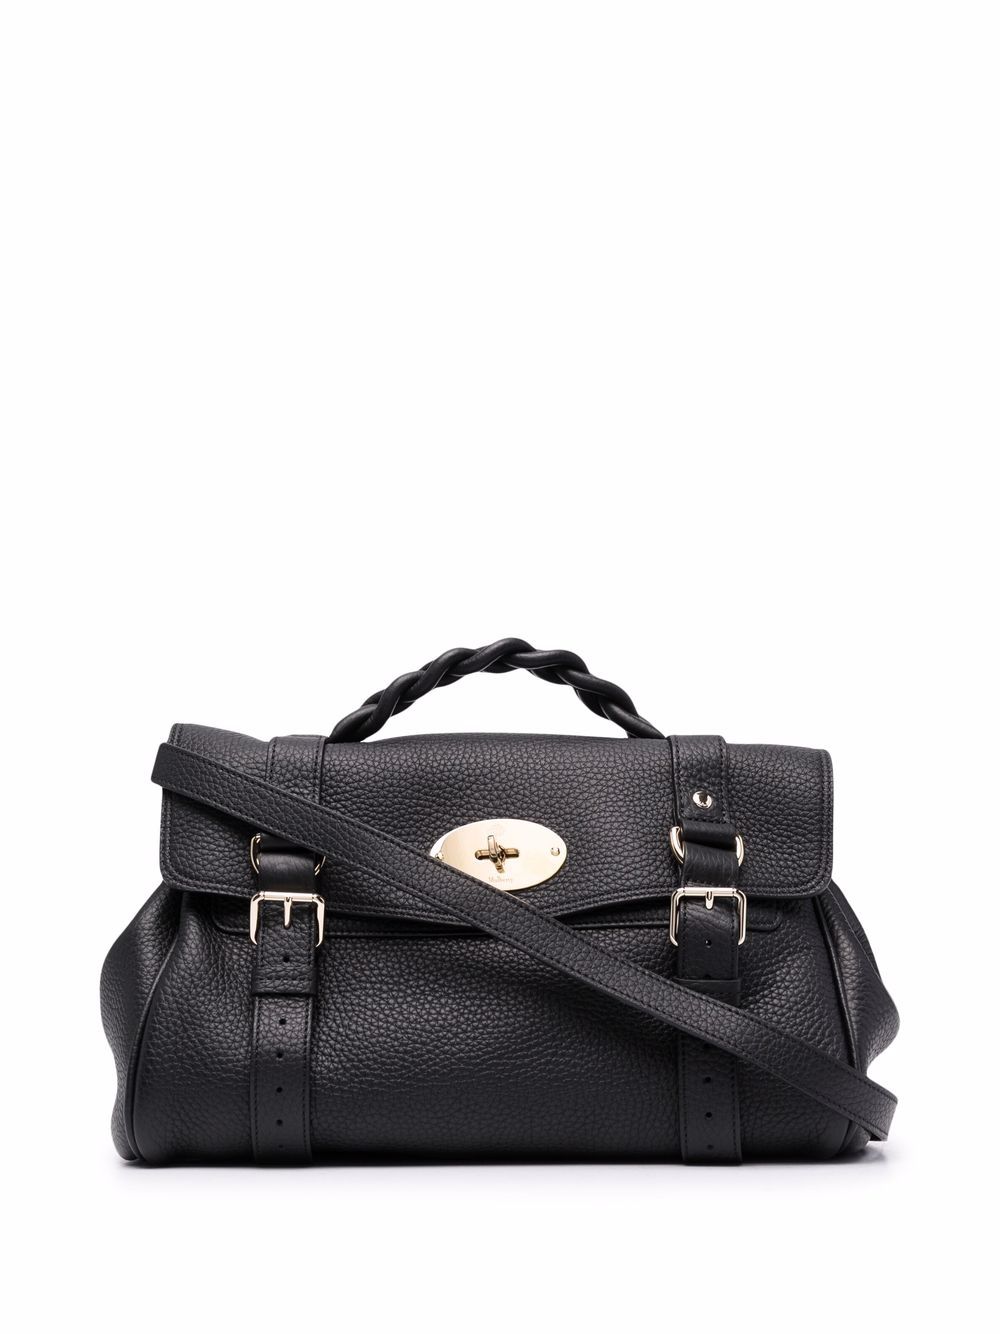 Mulberry Alexa leather satchel bag - Black von Mulberry